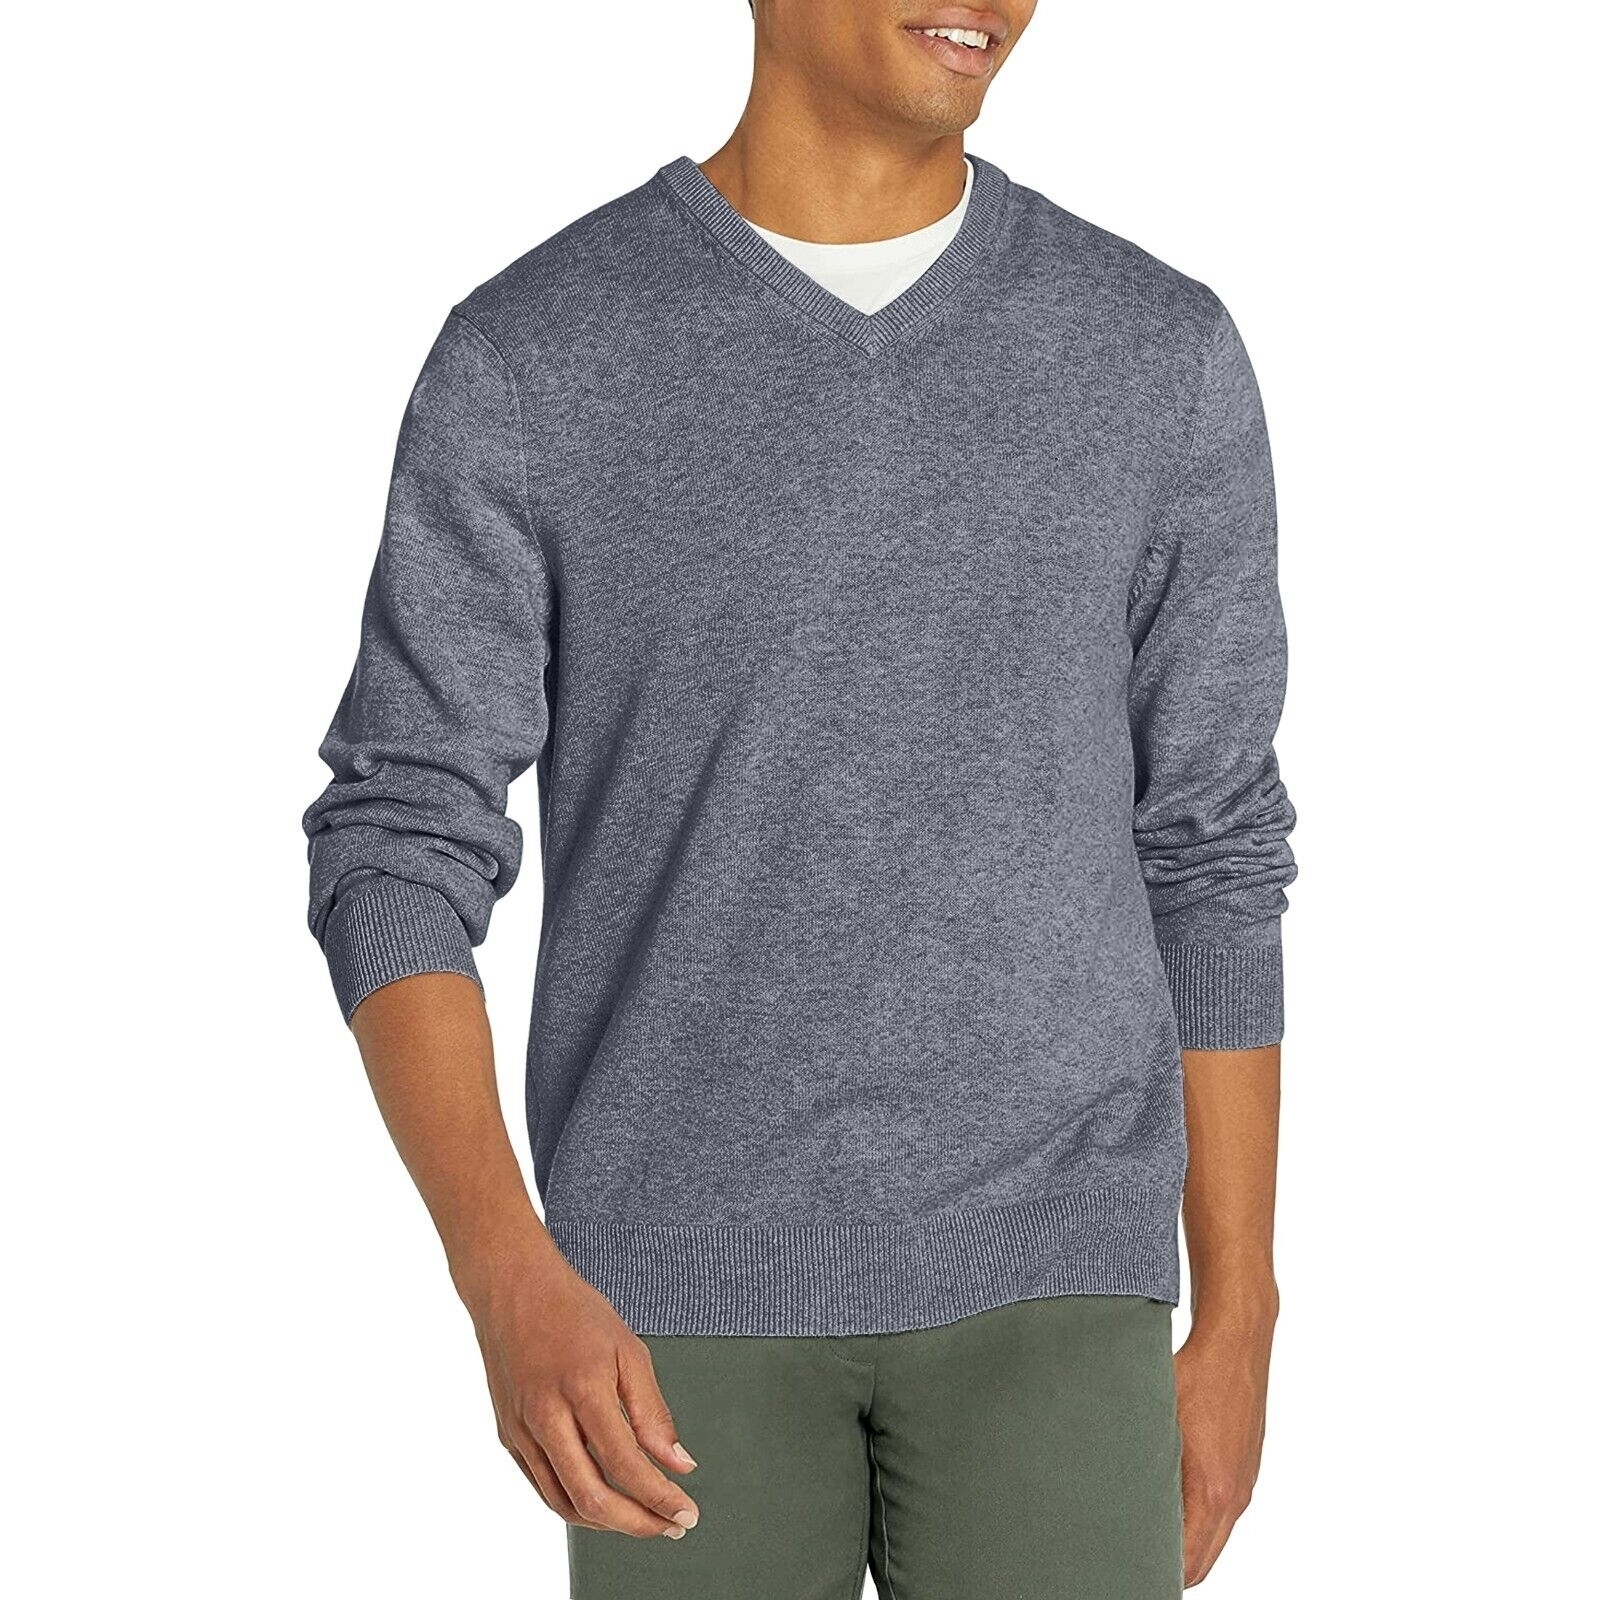 Men's Casual Ultra-Soft Slim Fit Warm Knit Pullover V-Neck Sweater For Winter - Black, Medium